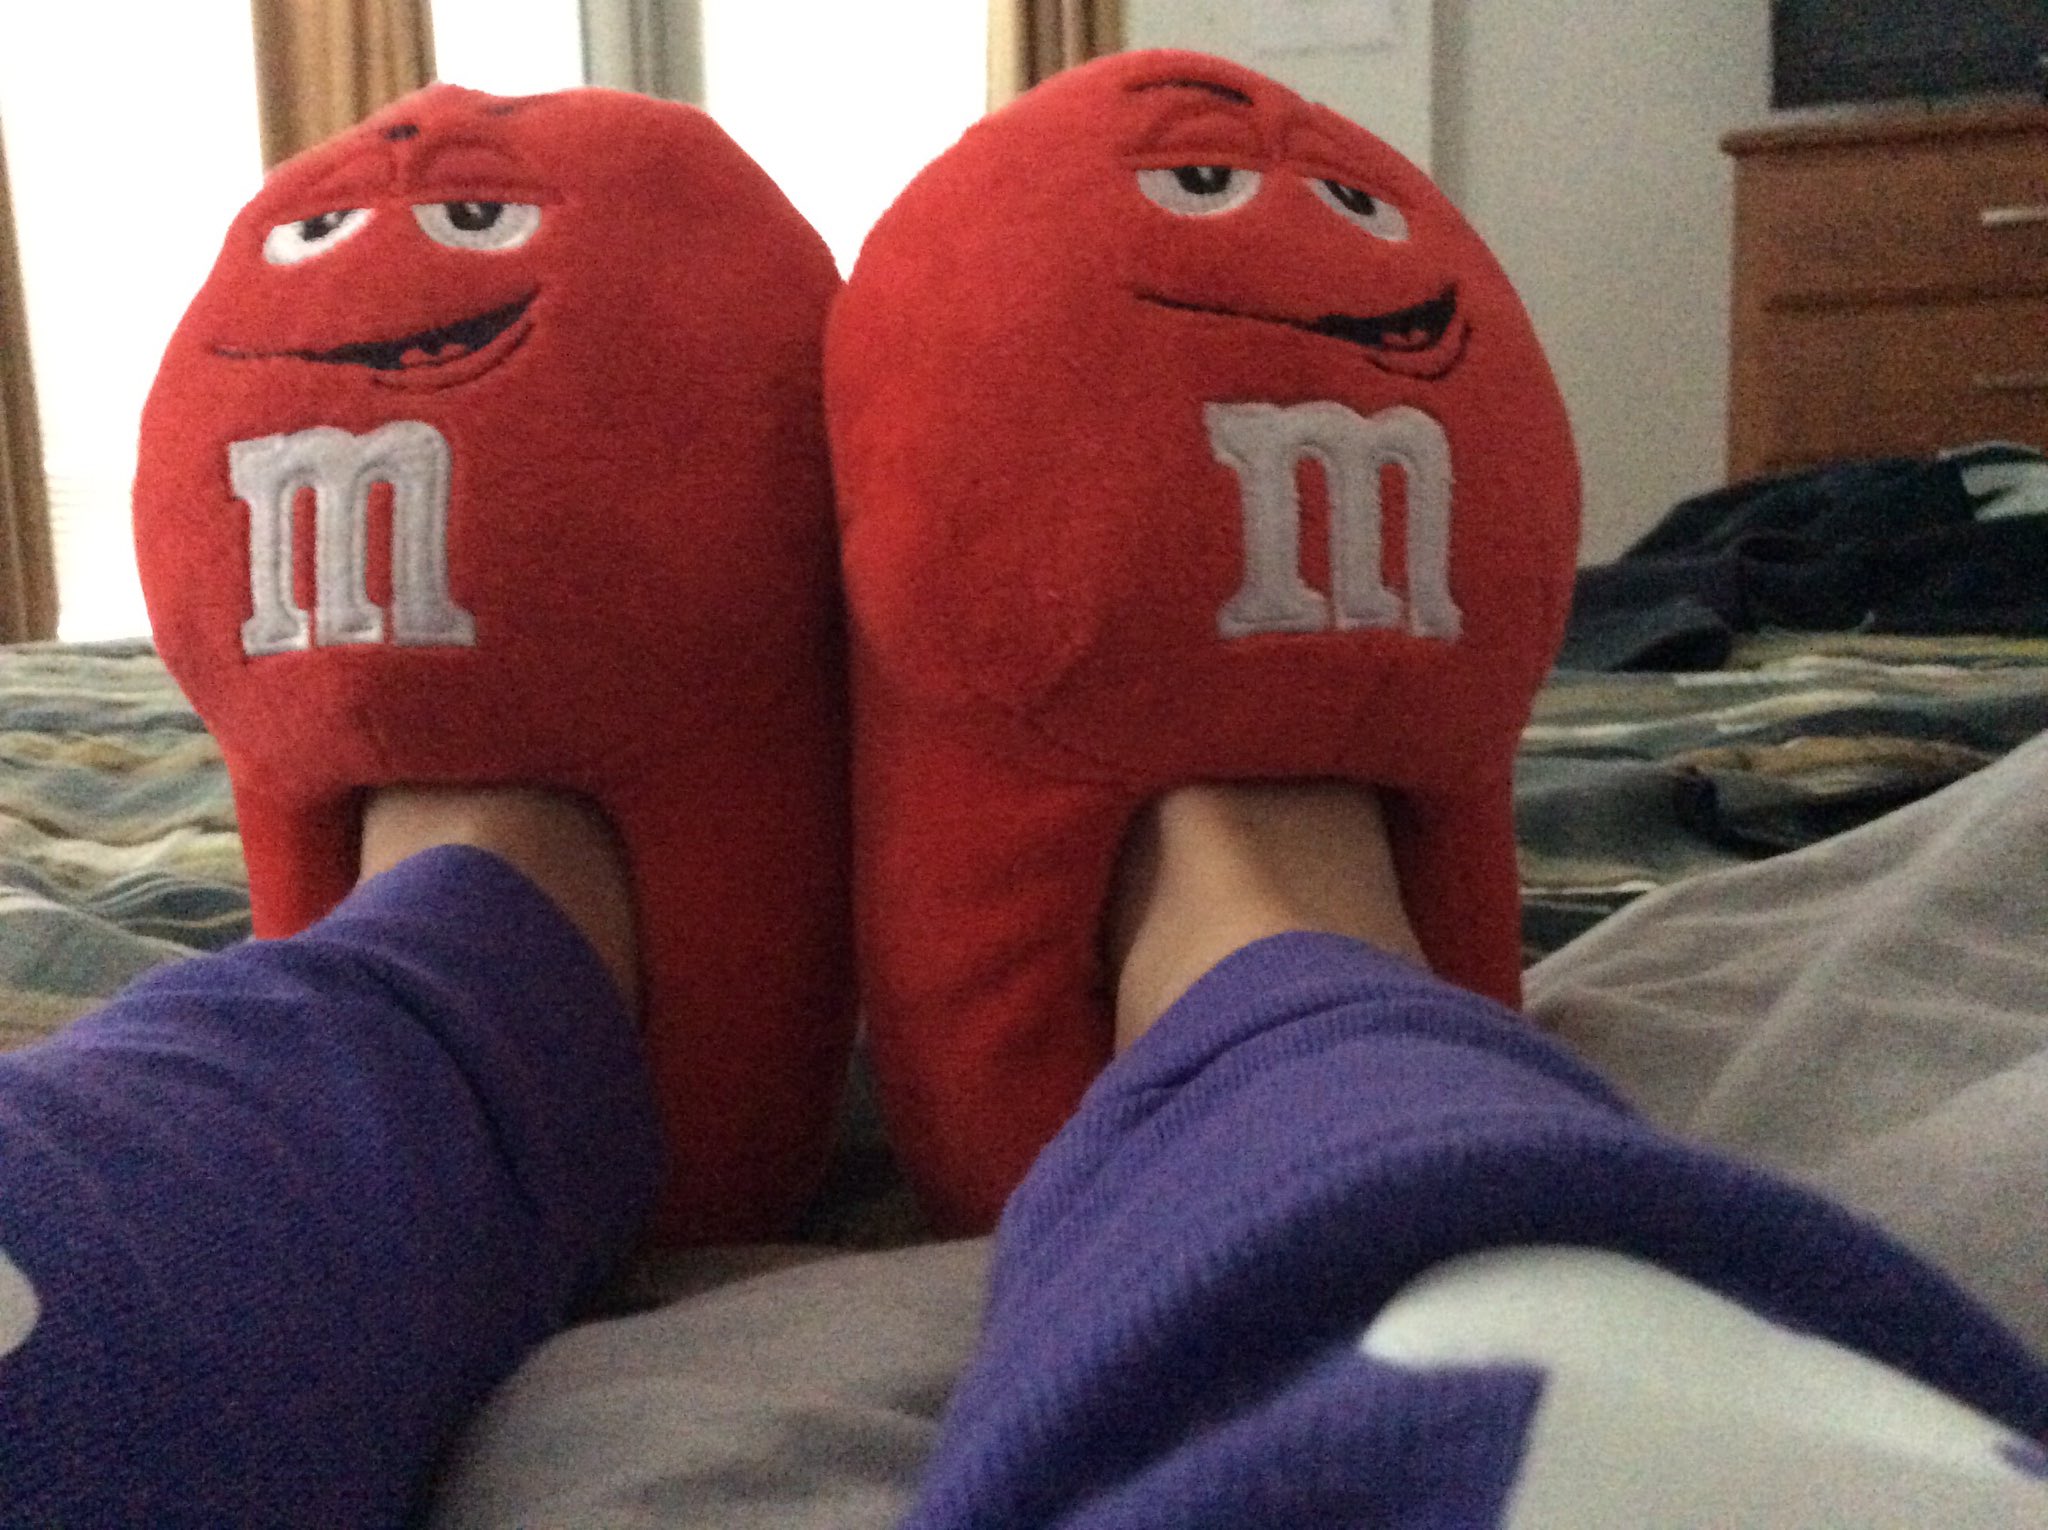 m&m slippers